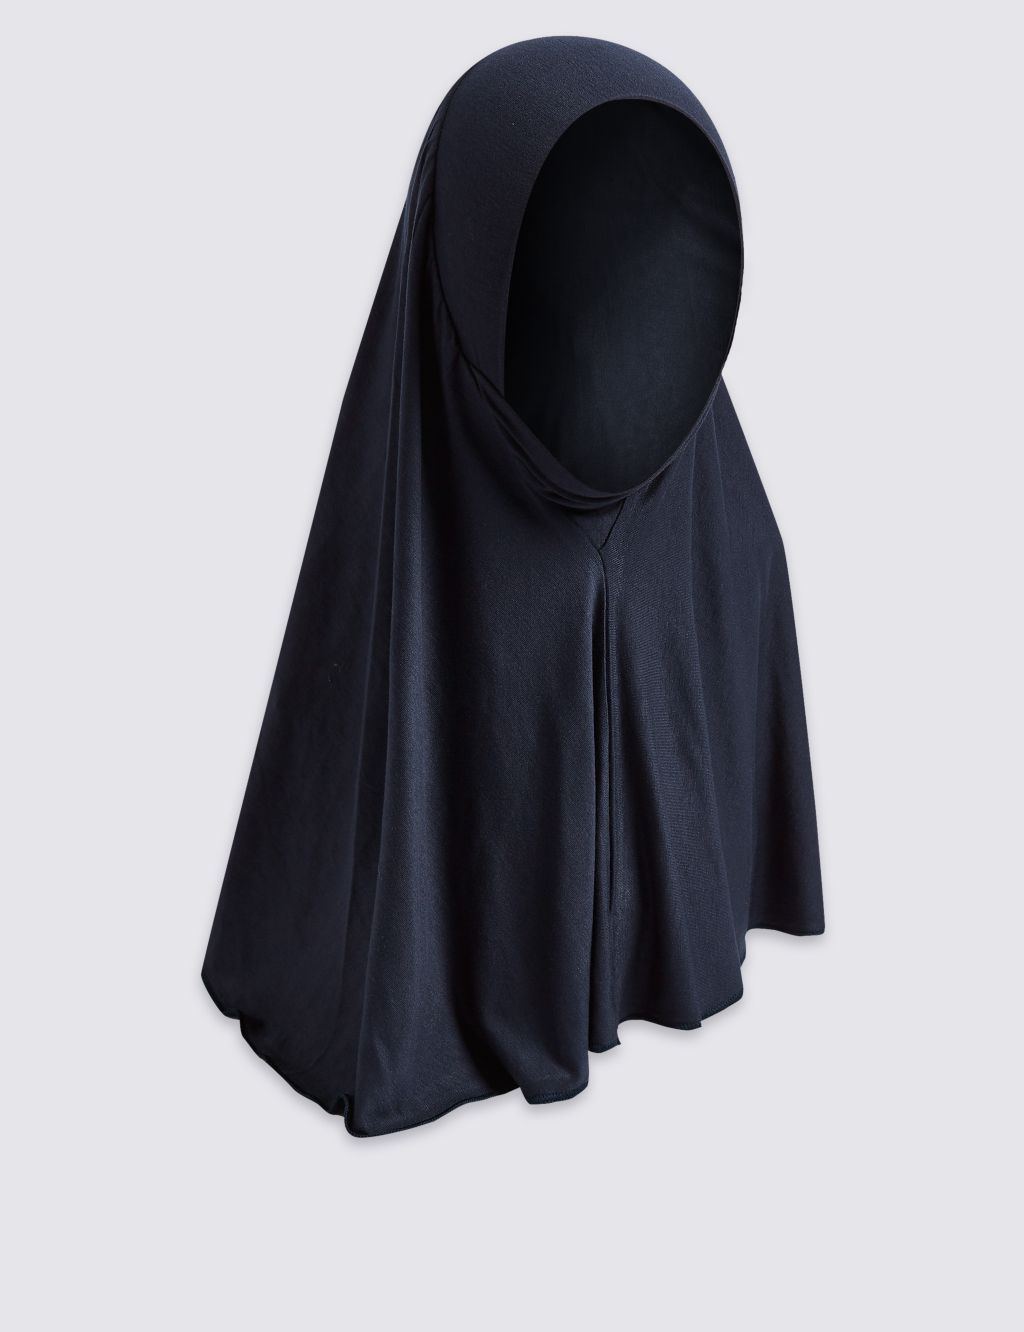 Hijab image 1